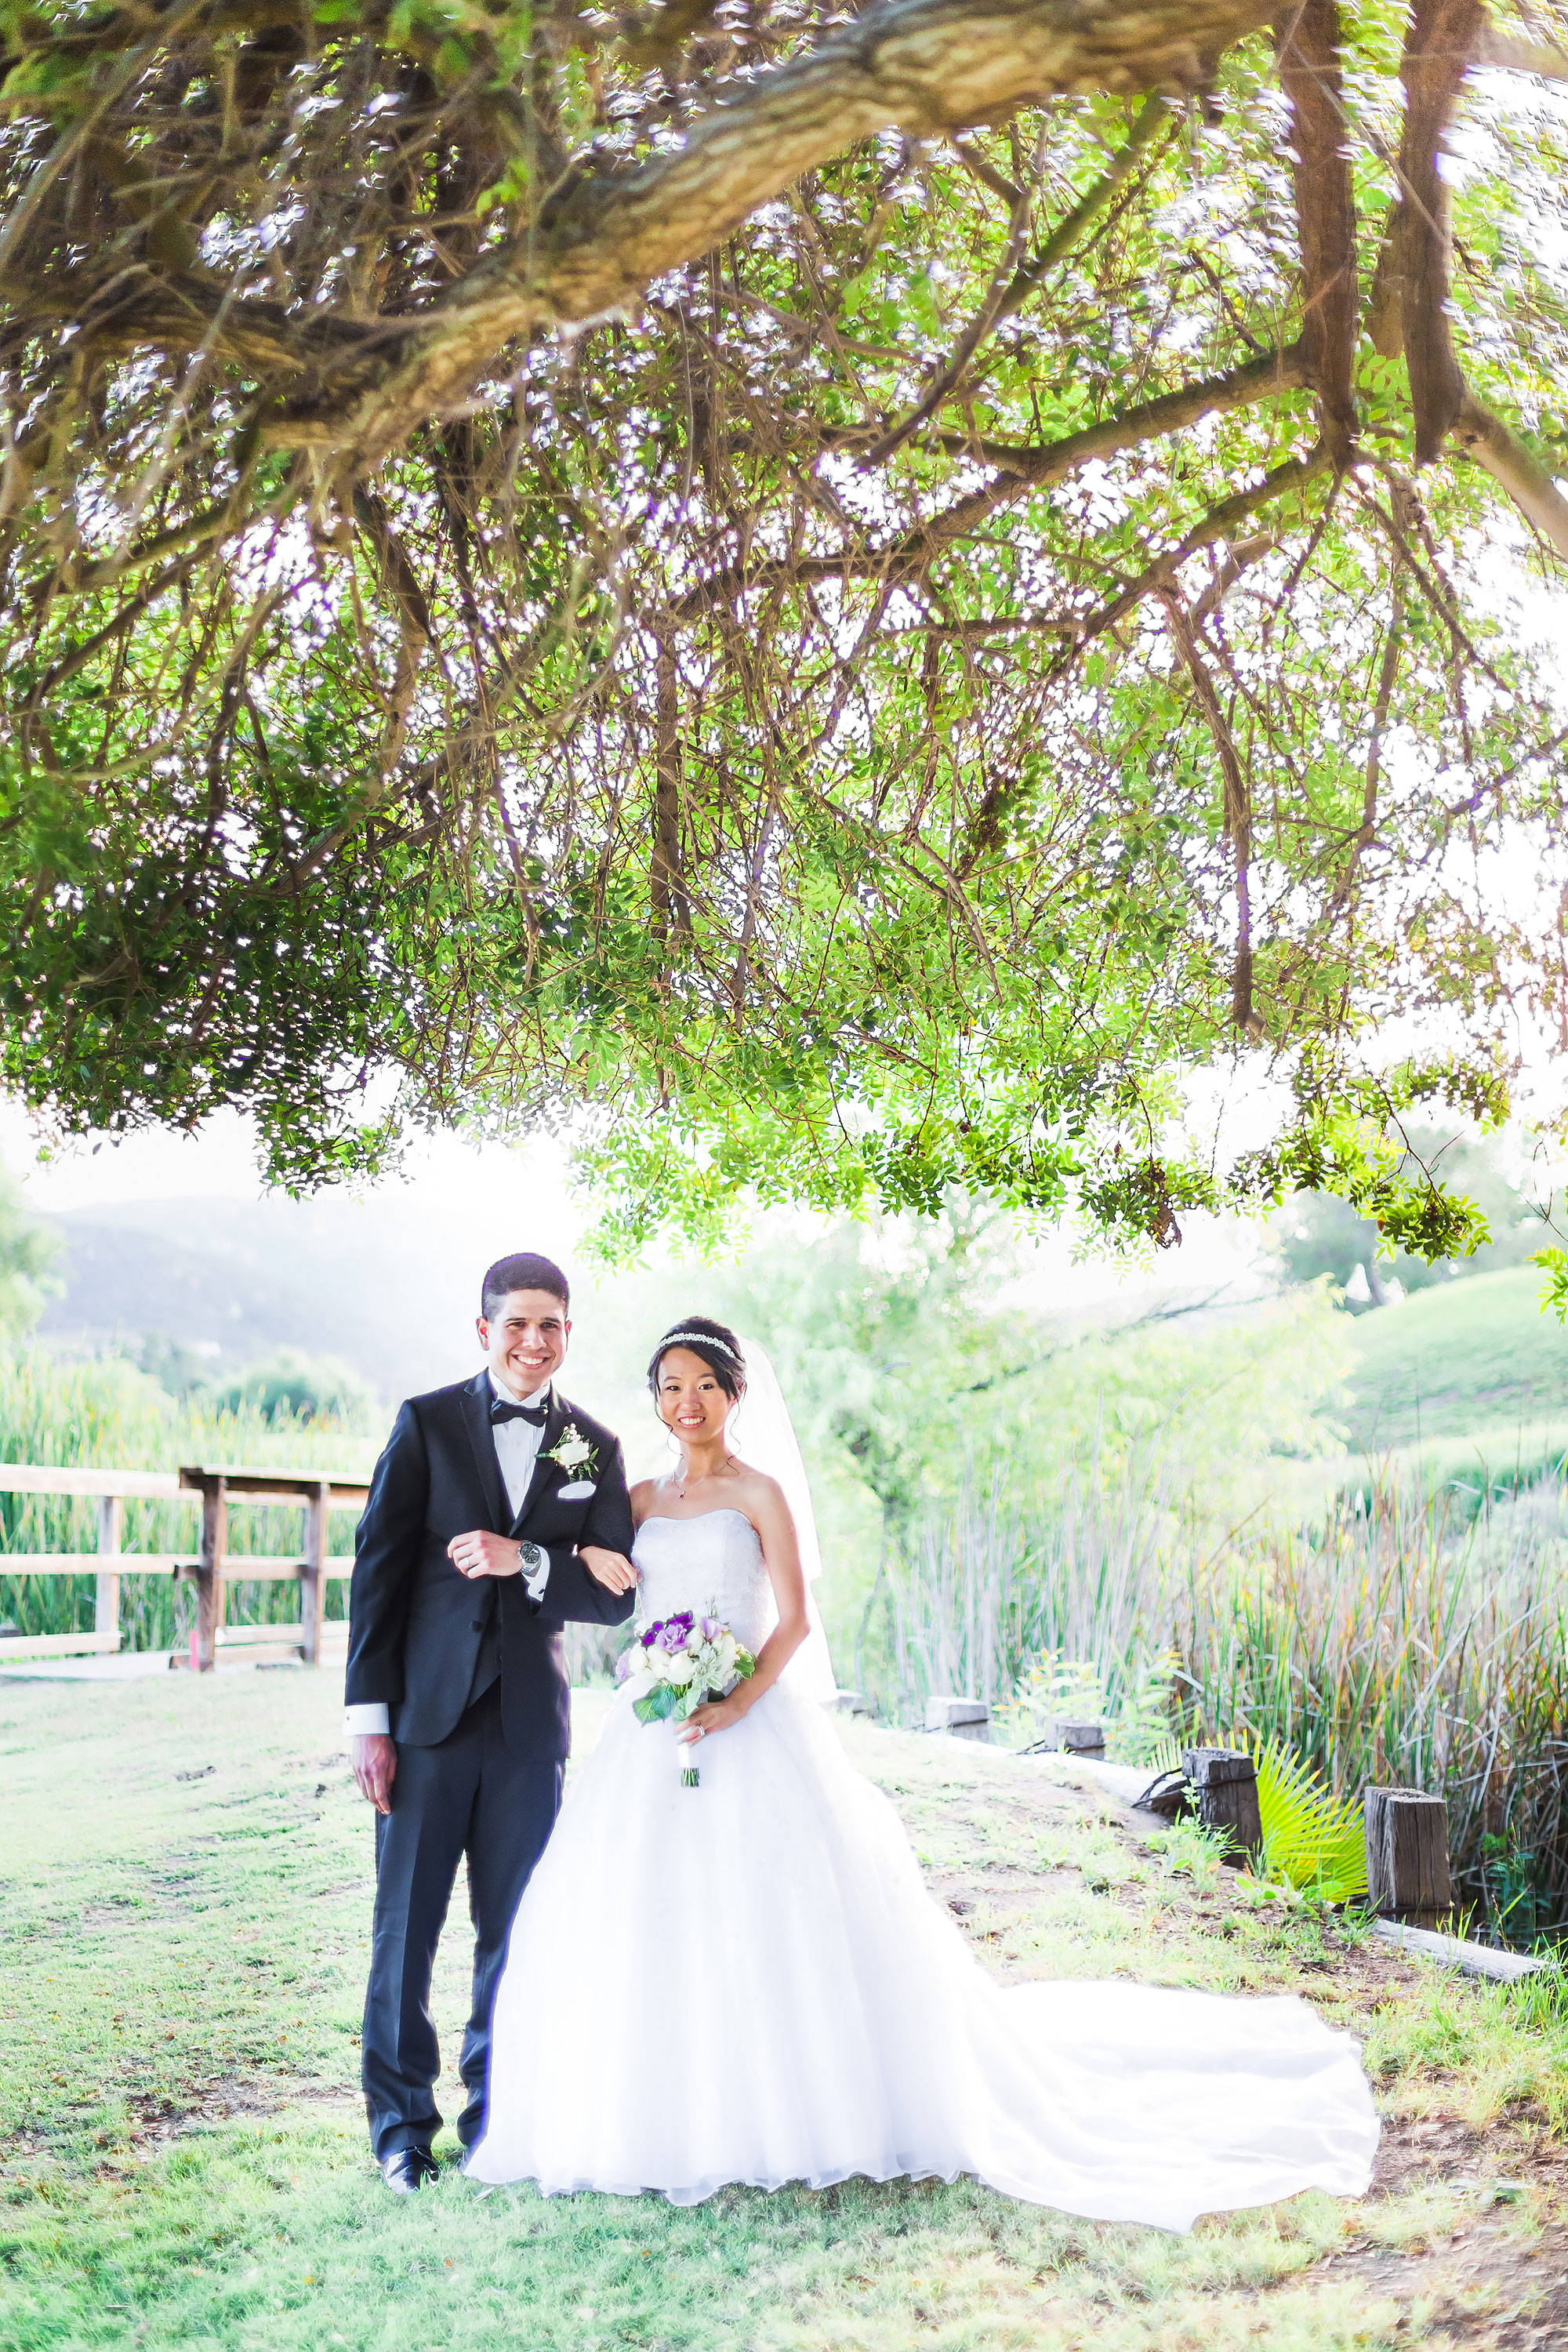 Turner Hill Wedding Photographer | Stephen Grant Photography